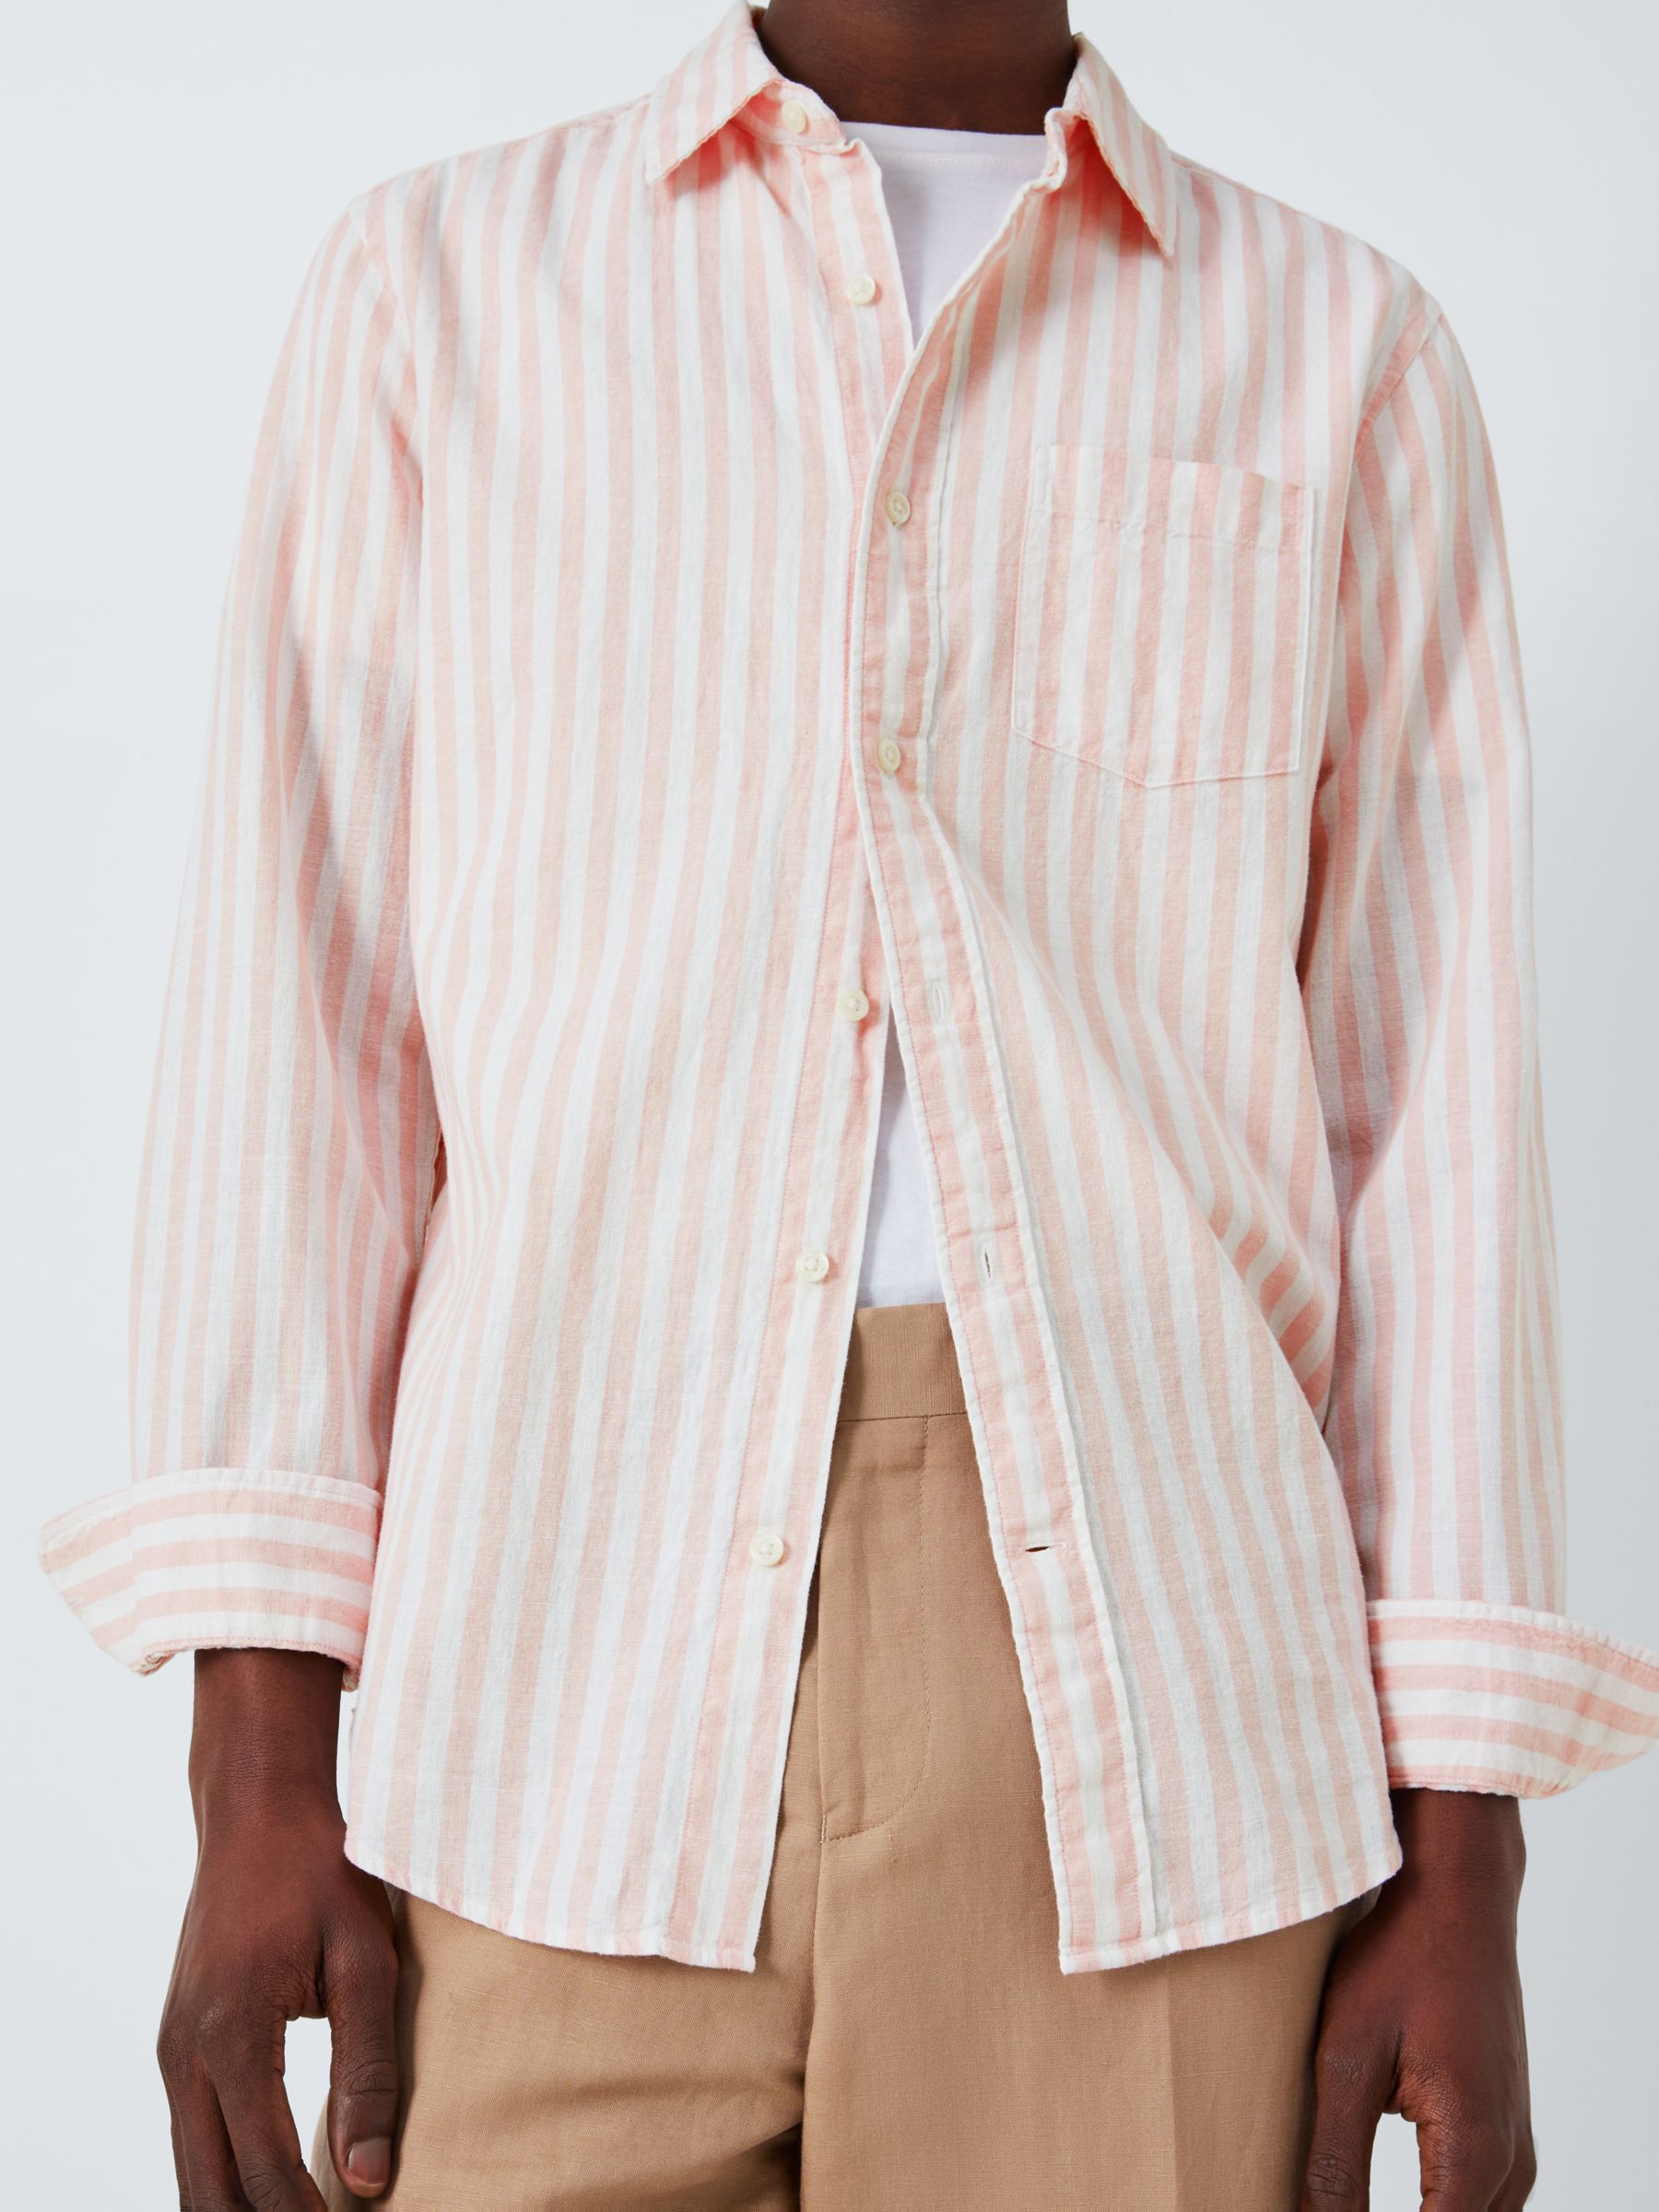 Buy John Lewis Linen Blend Stripe Long Sleeve Shirt Online at johnlewis.com